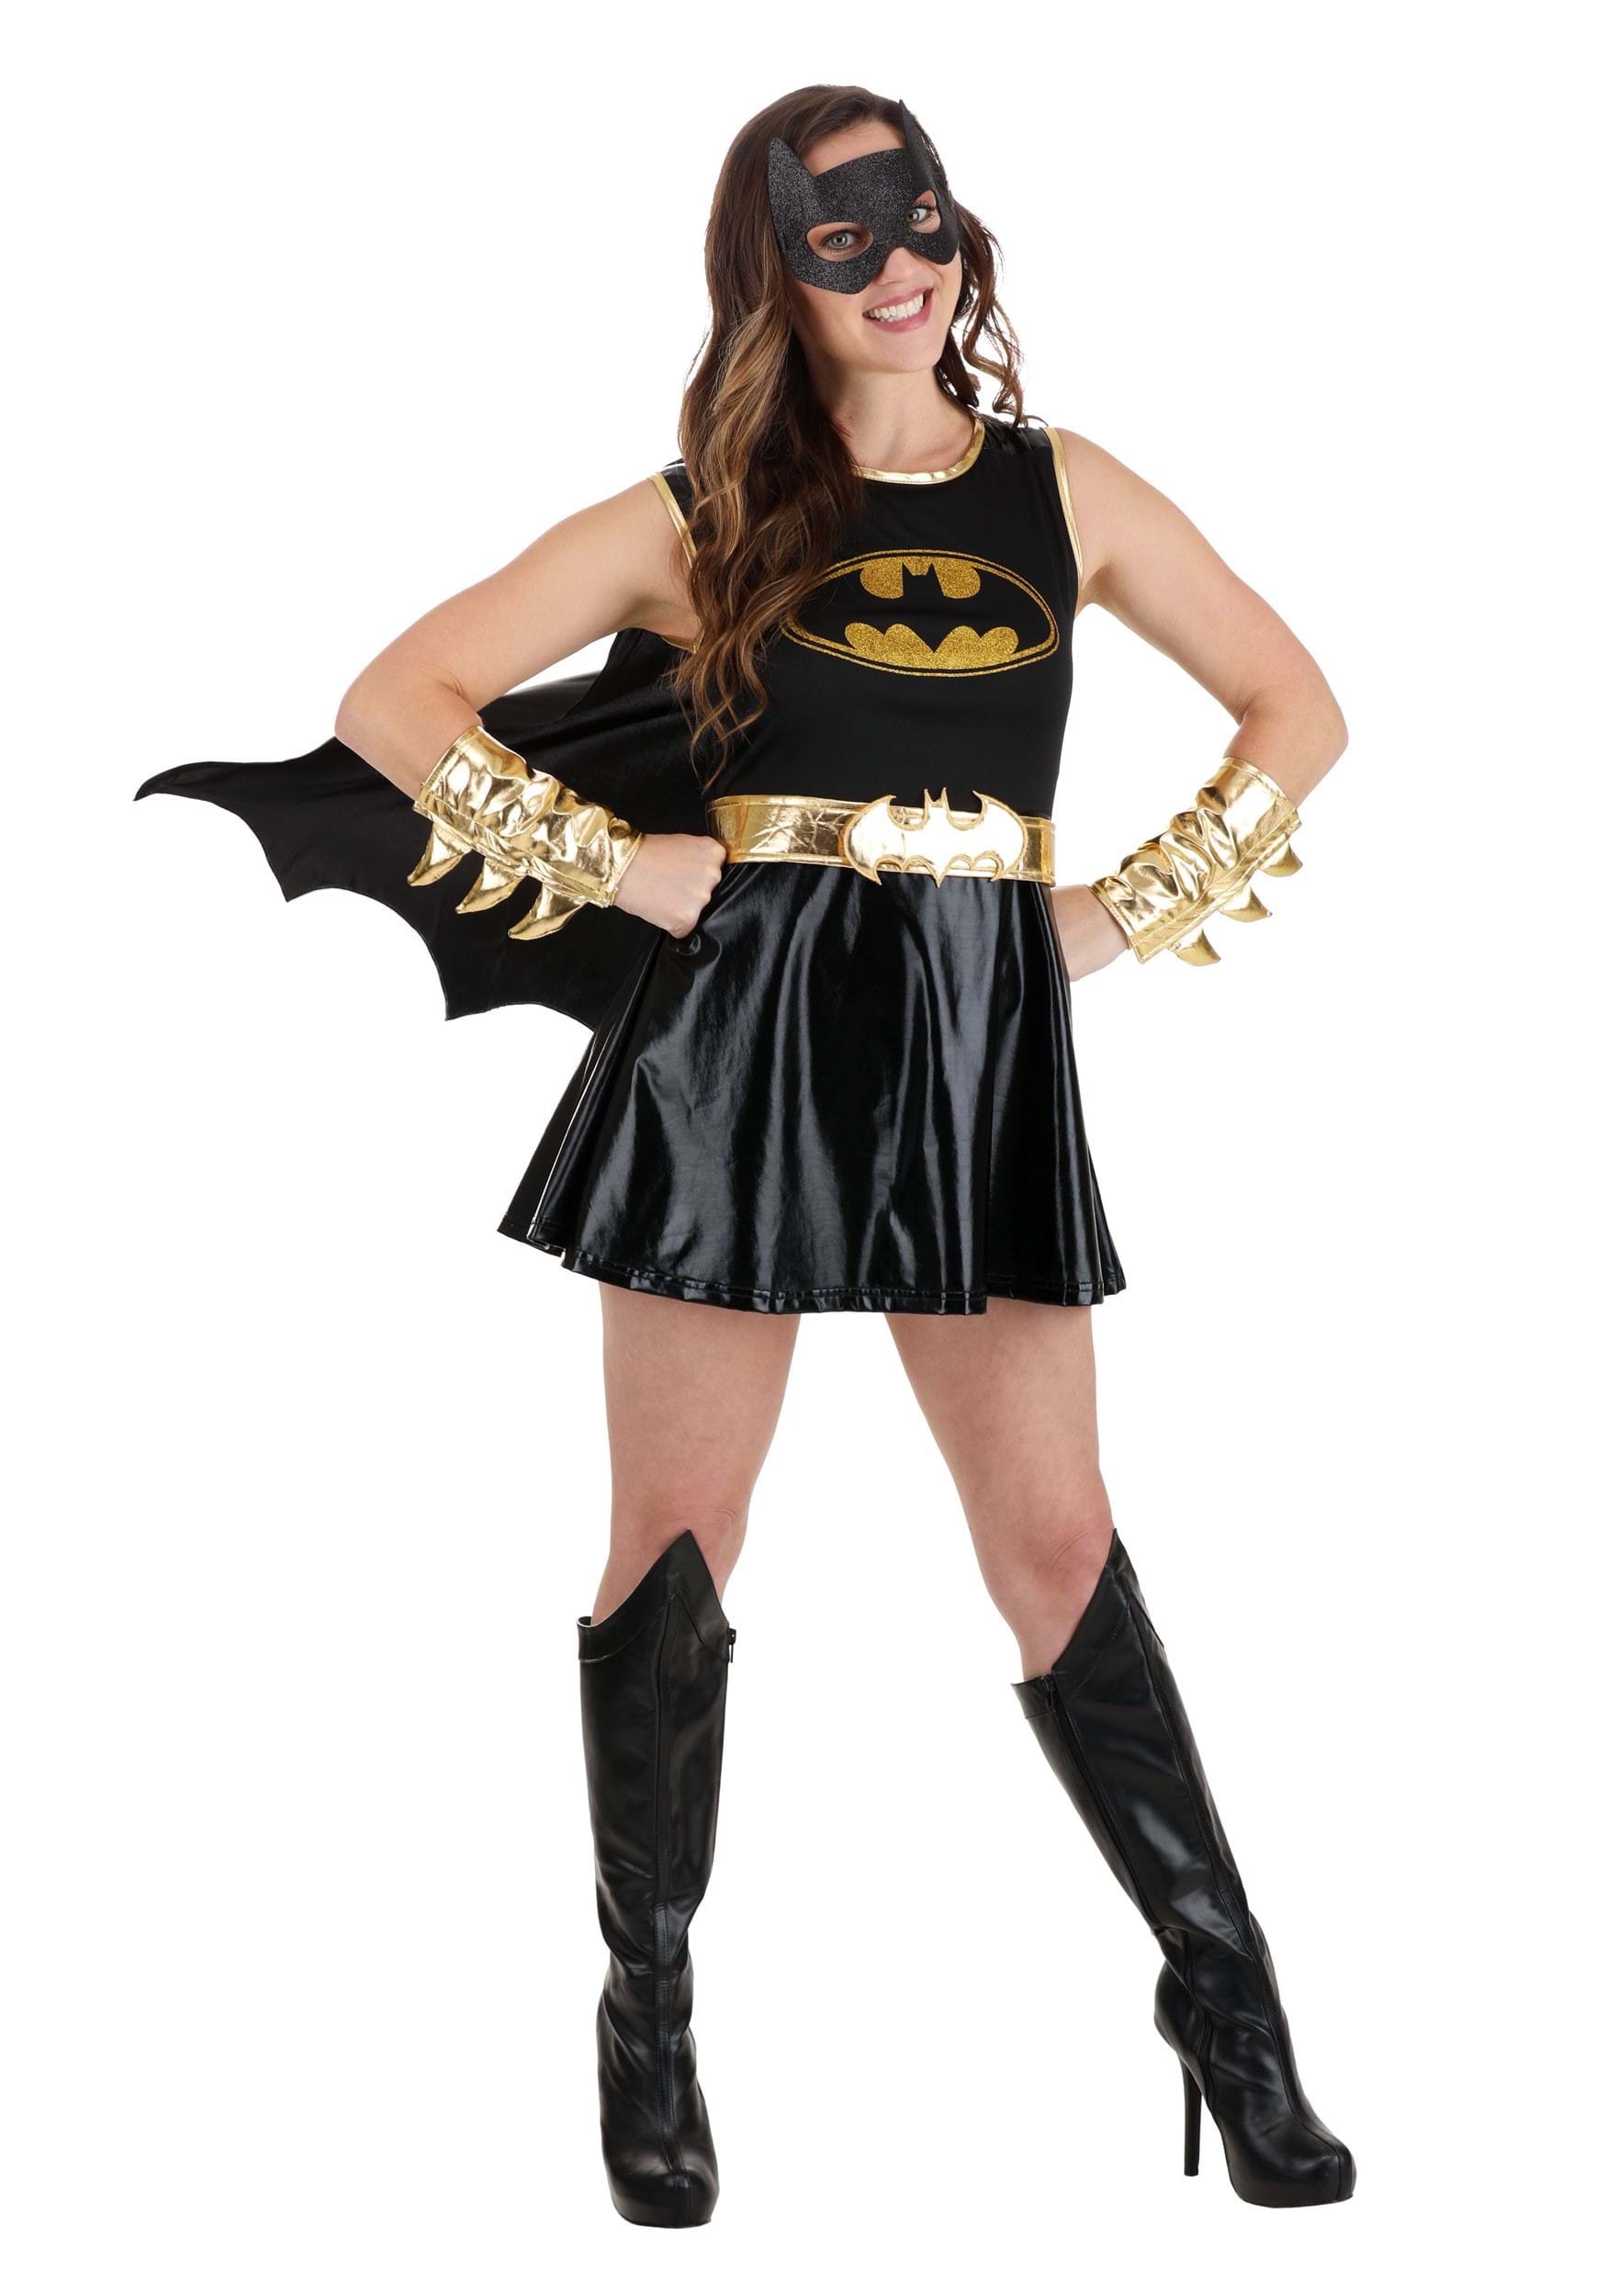 Lily Immunitet Lure Batgirl Women's Heroic Costume